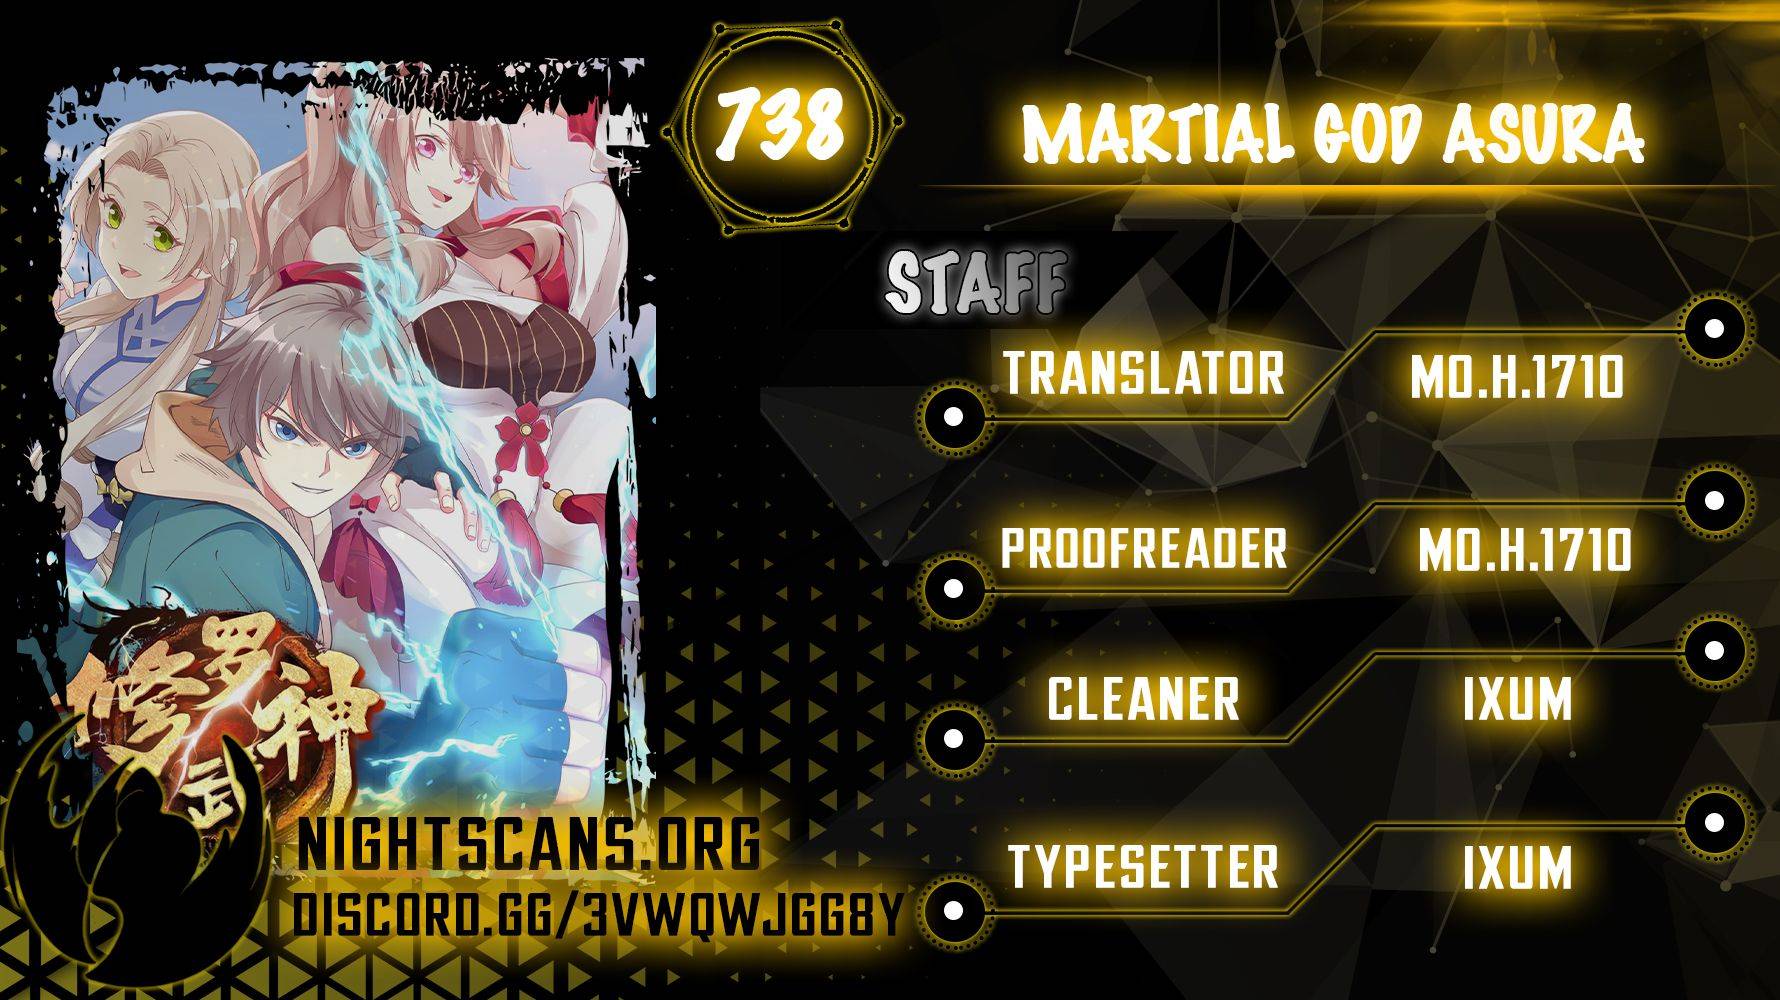 Martial God Asura Chapter 738